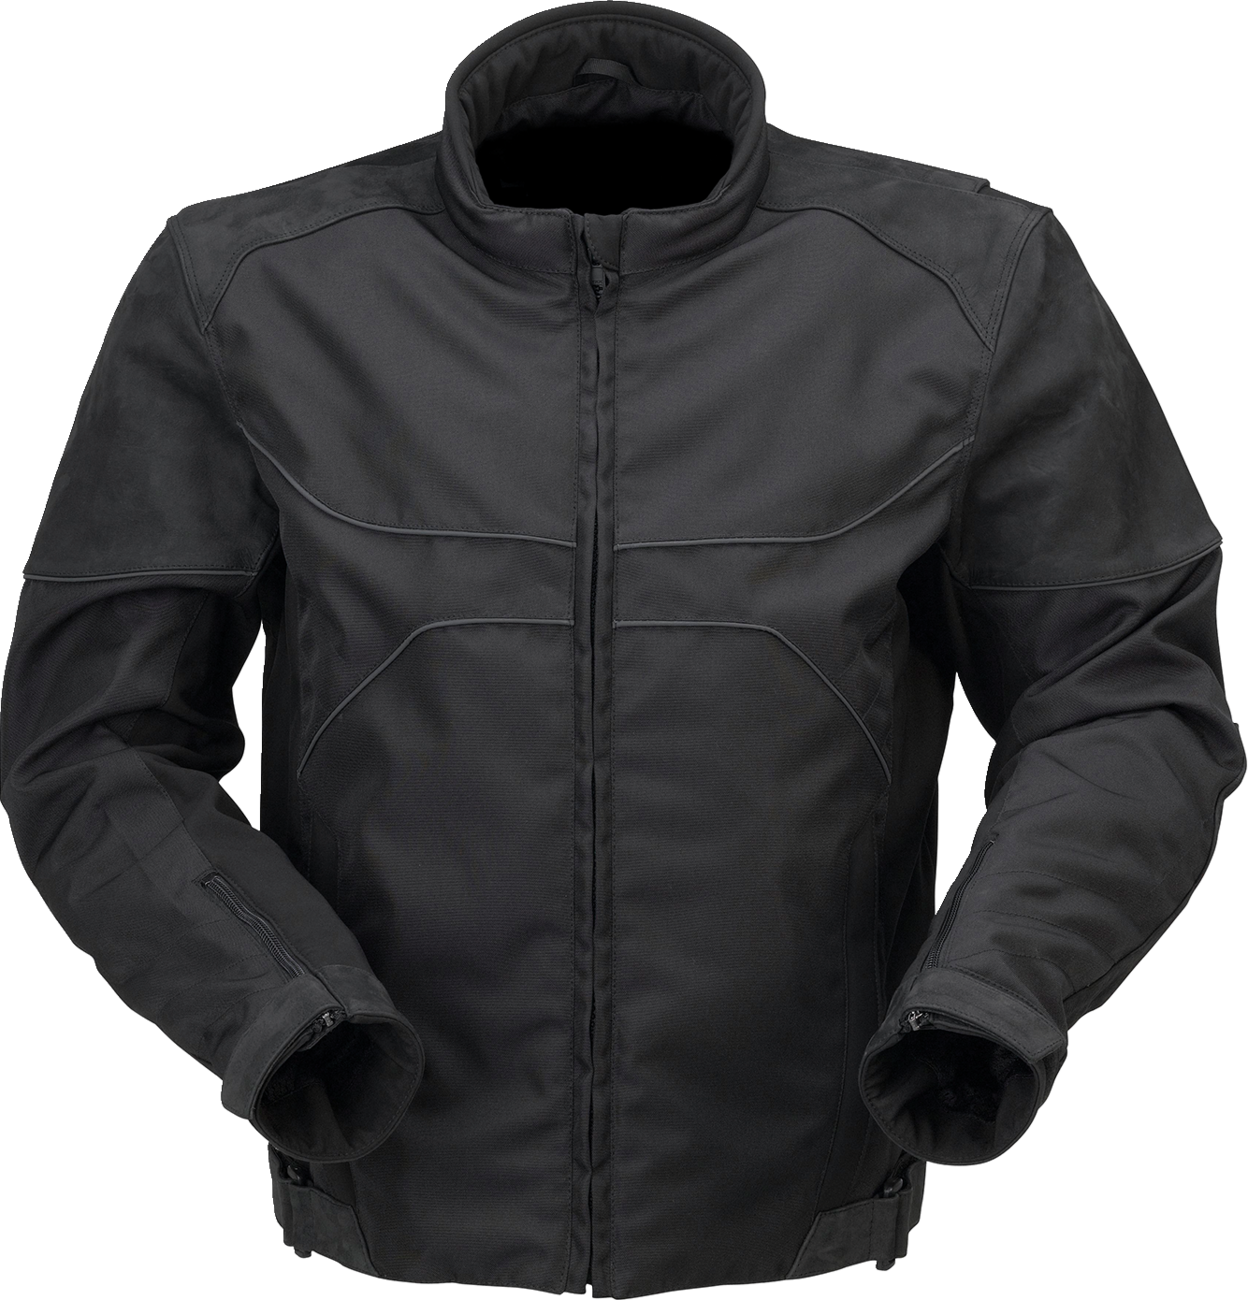 Z1R Reverance Jacket - Black - XL 2820-5786